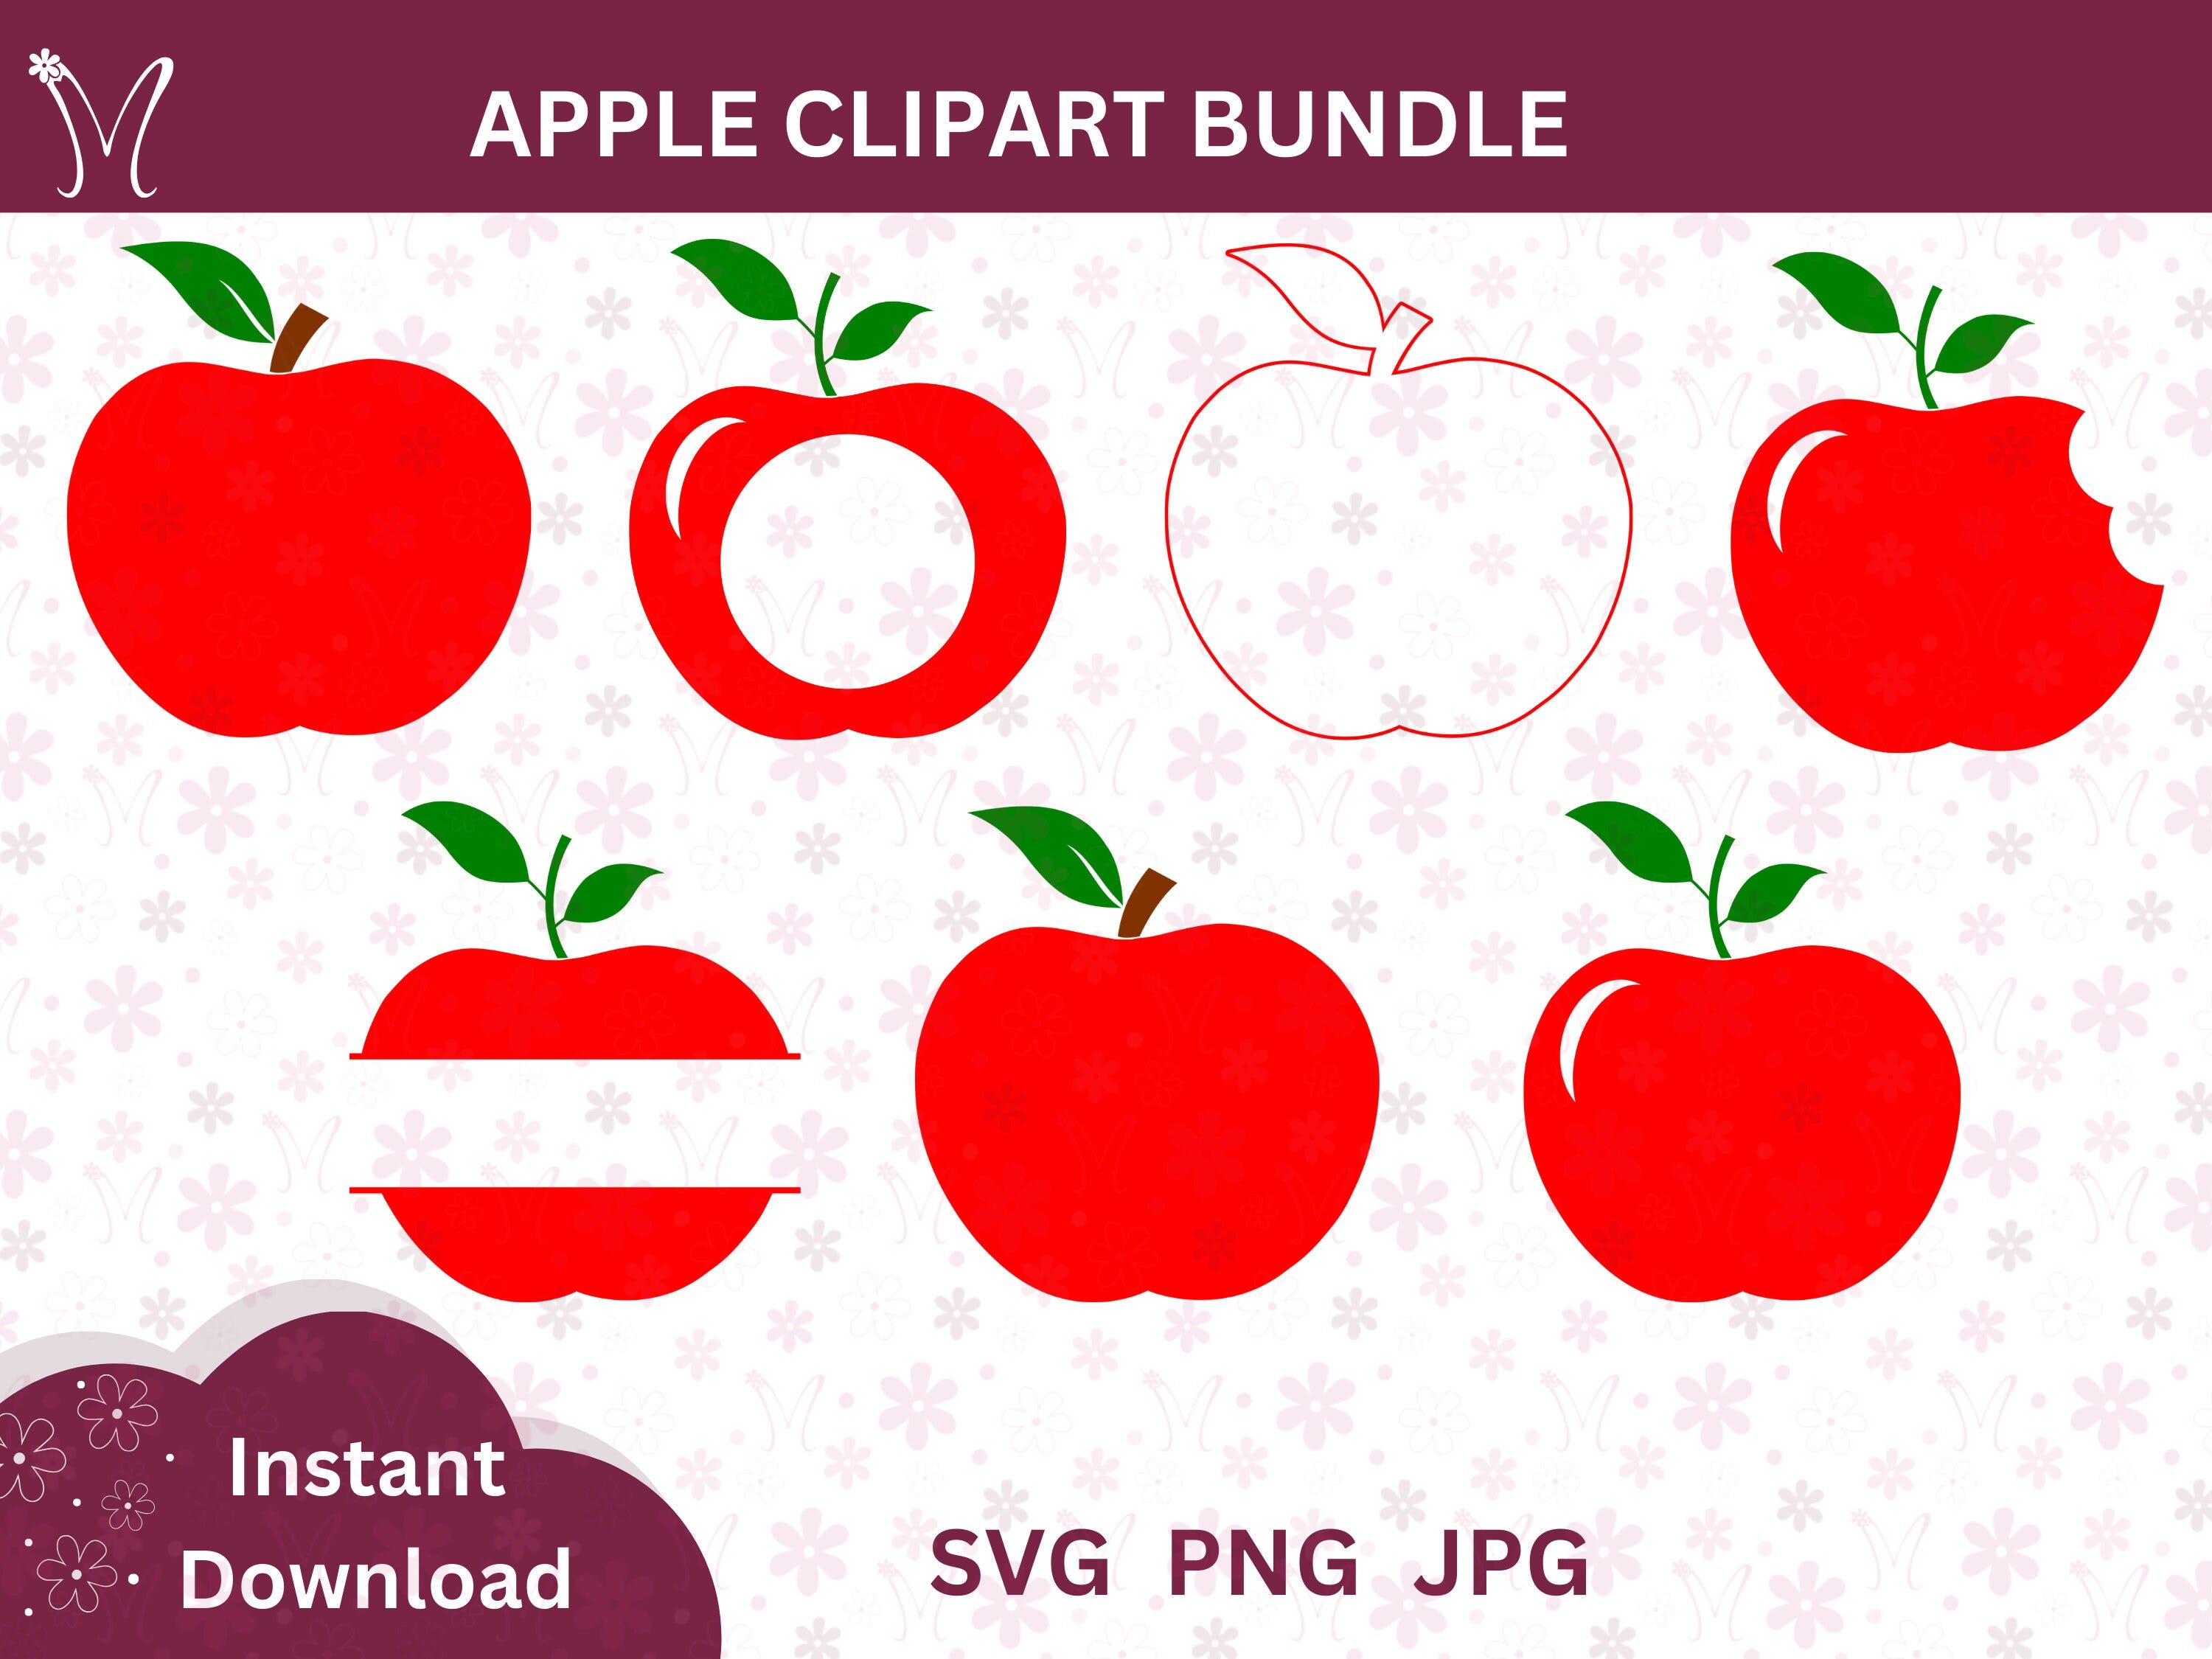 Apple Clipart SVG bundle, Name Frame SVG, Apple Svg, Teacher,  Cut file for Cricut, Silhouette, Vector Graphic, Instant download, PNG, Jpg